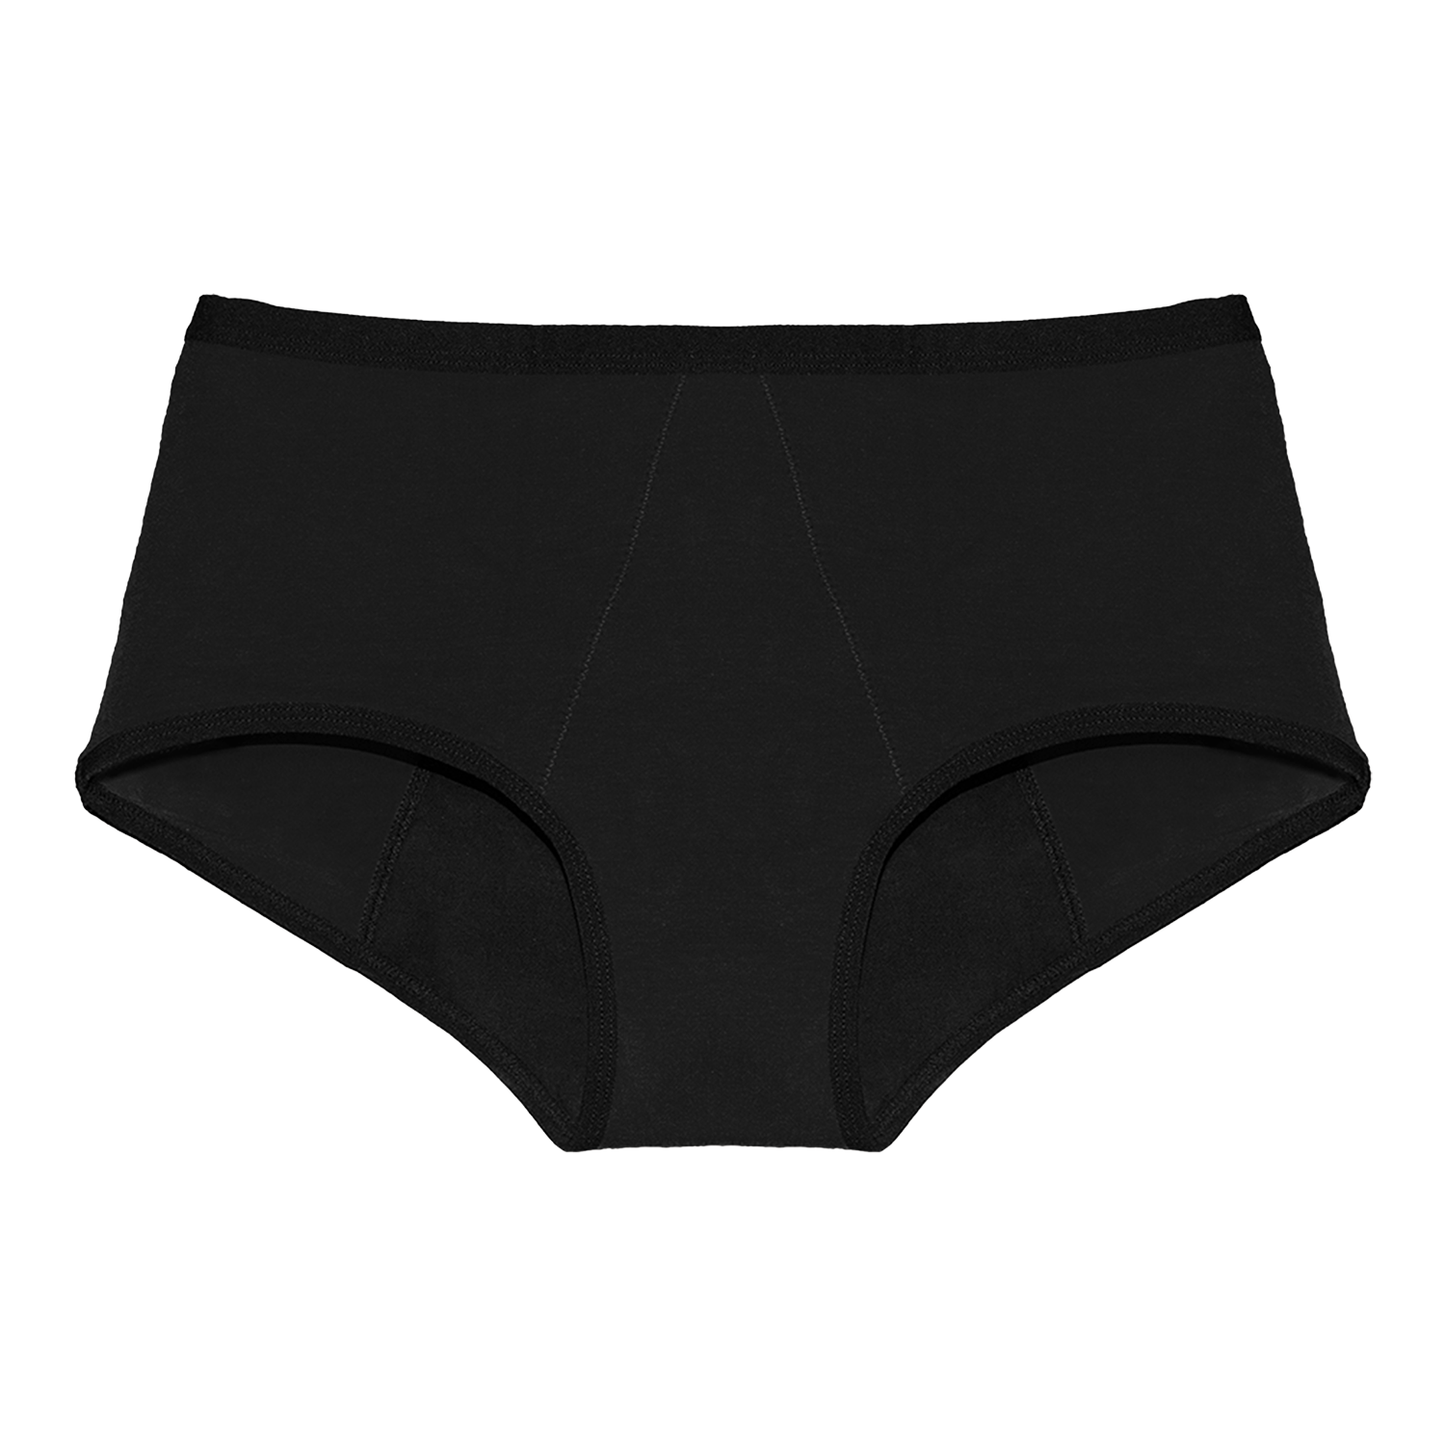 go pad free period underwear black color photo